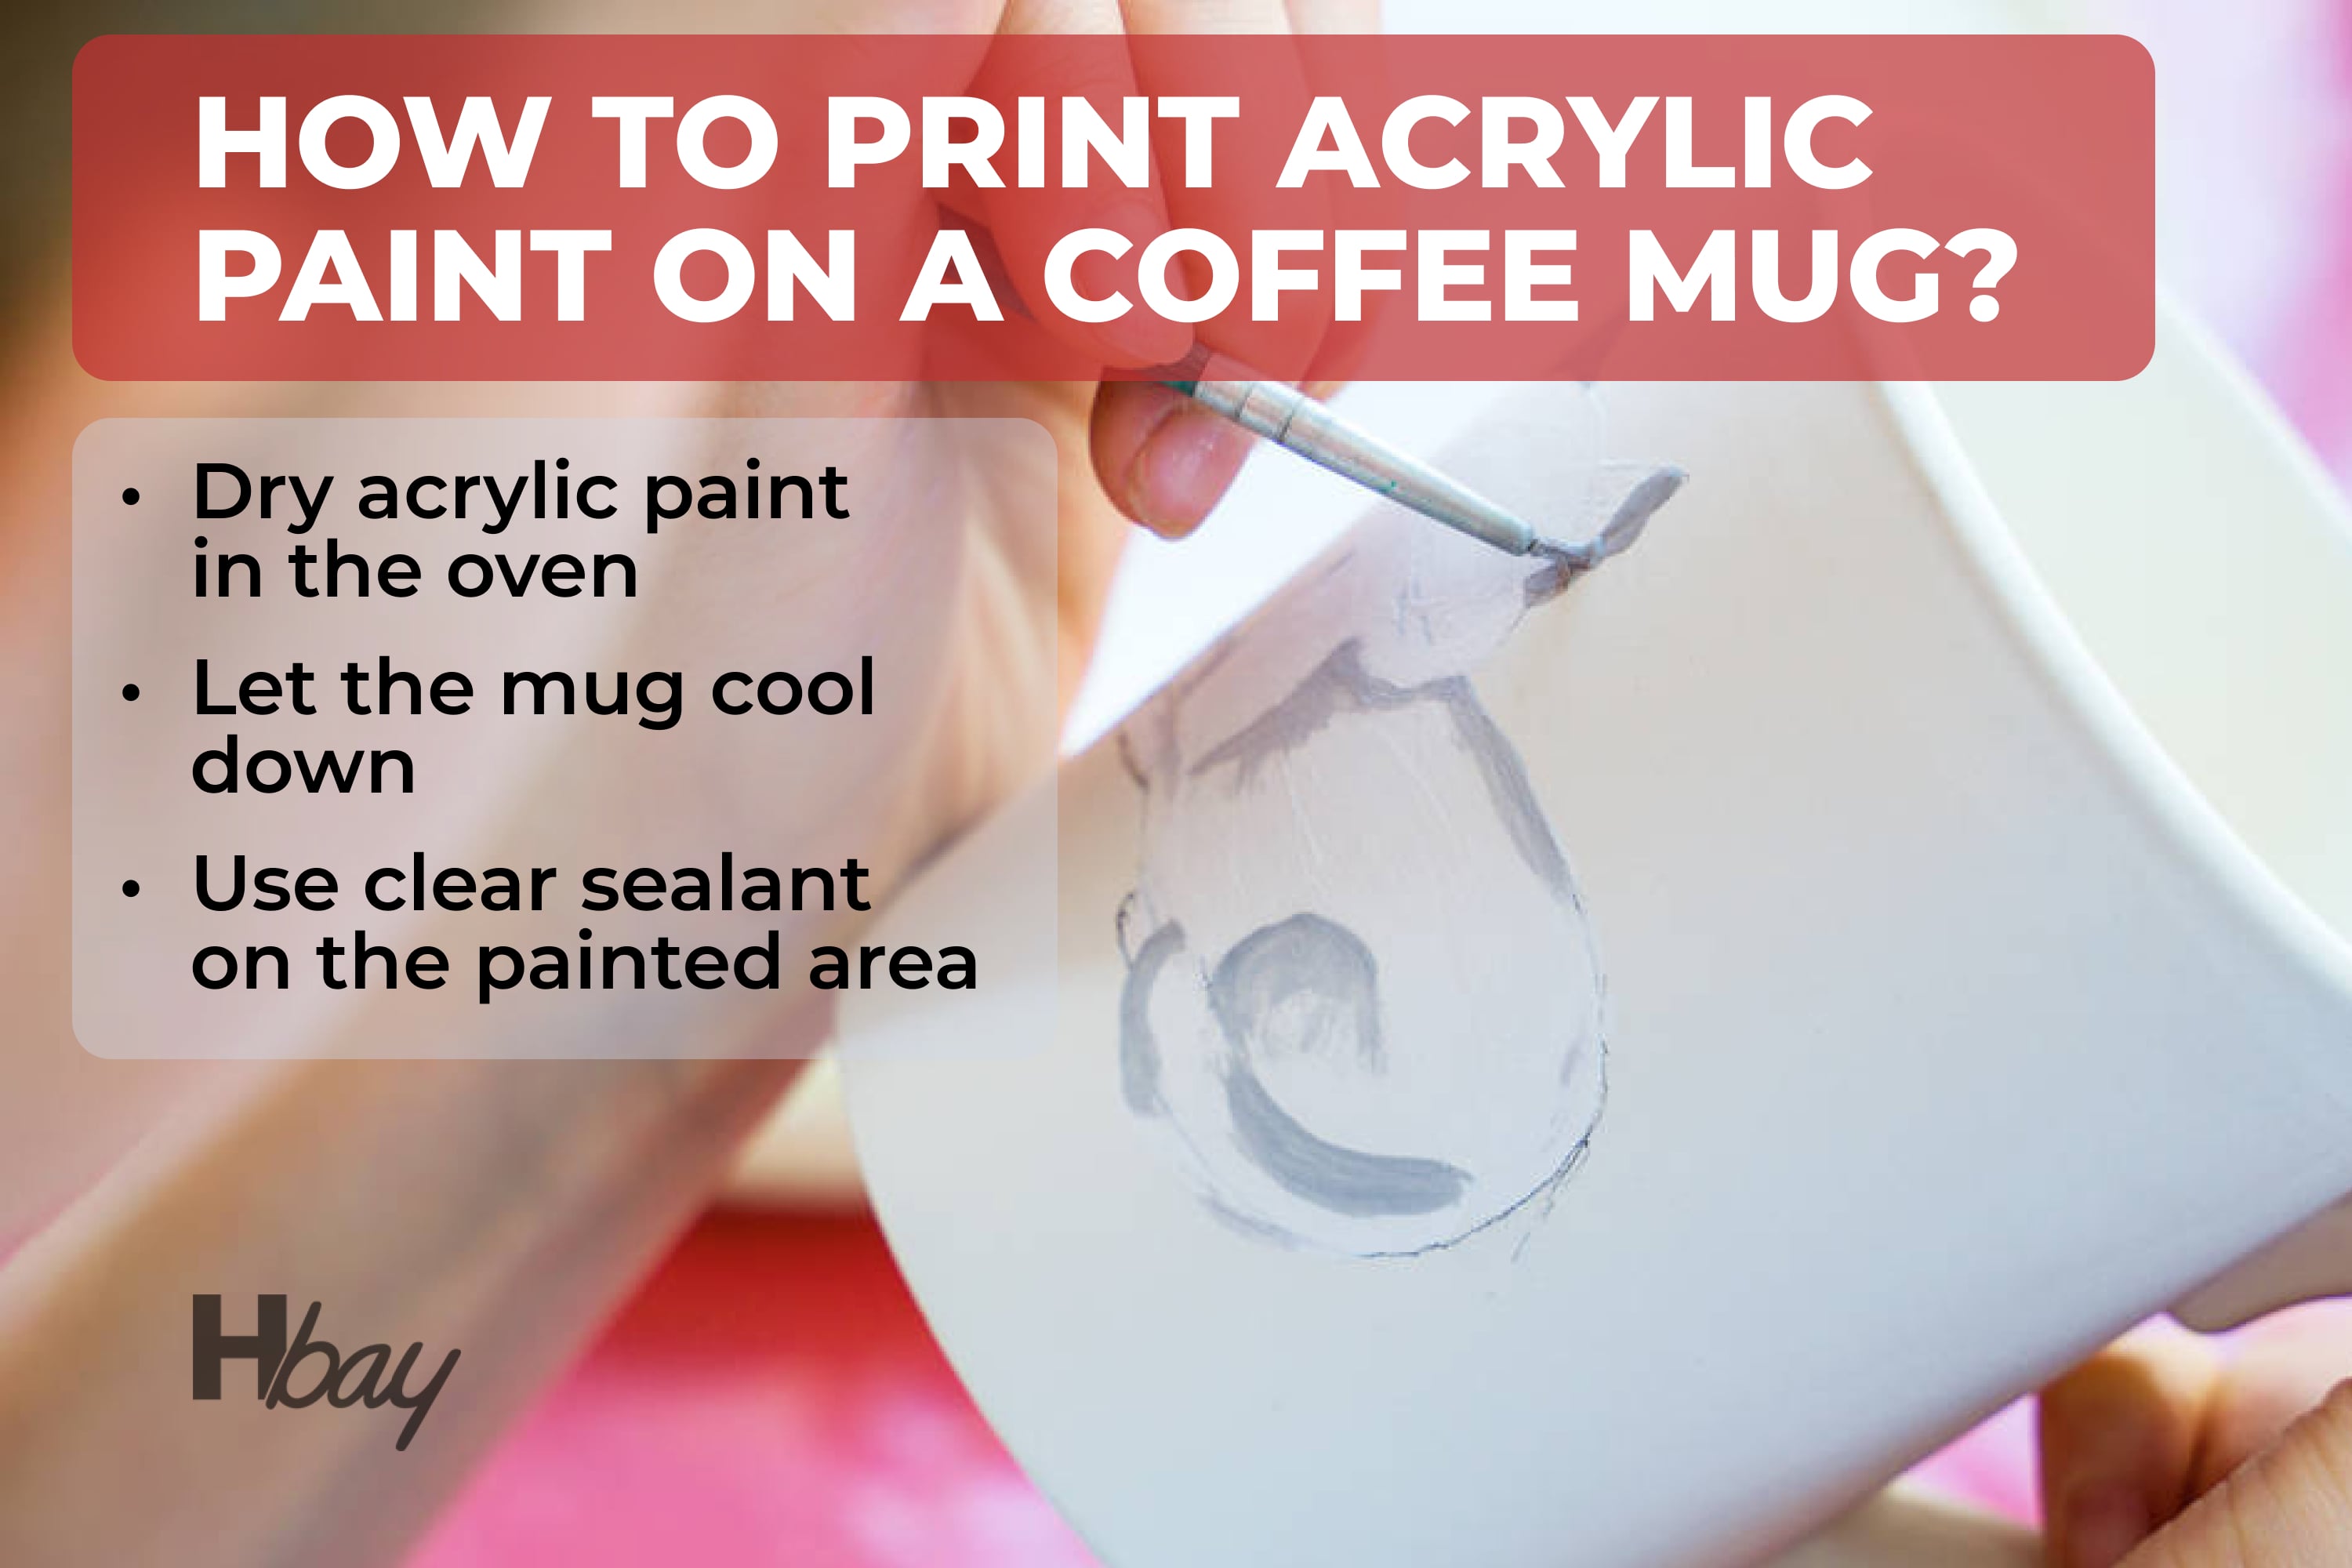 How to print acrylic paint on a coffee mug